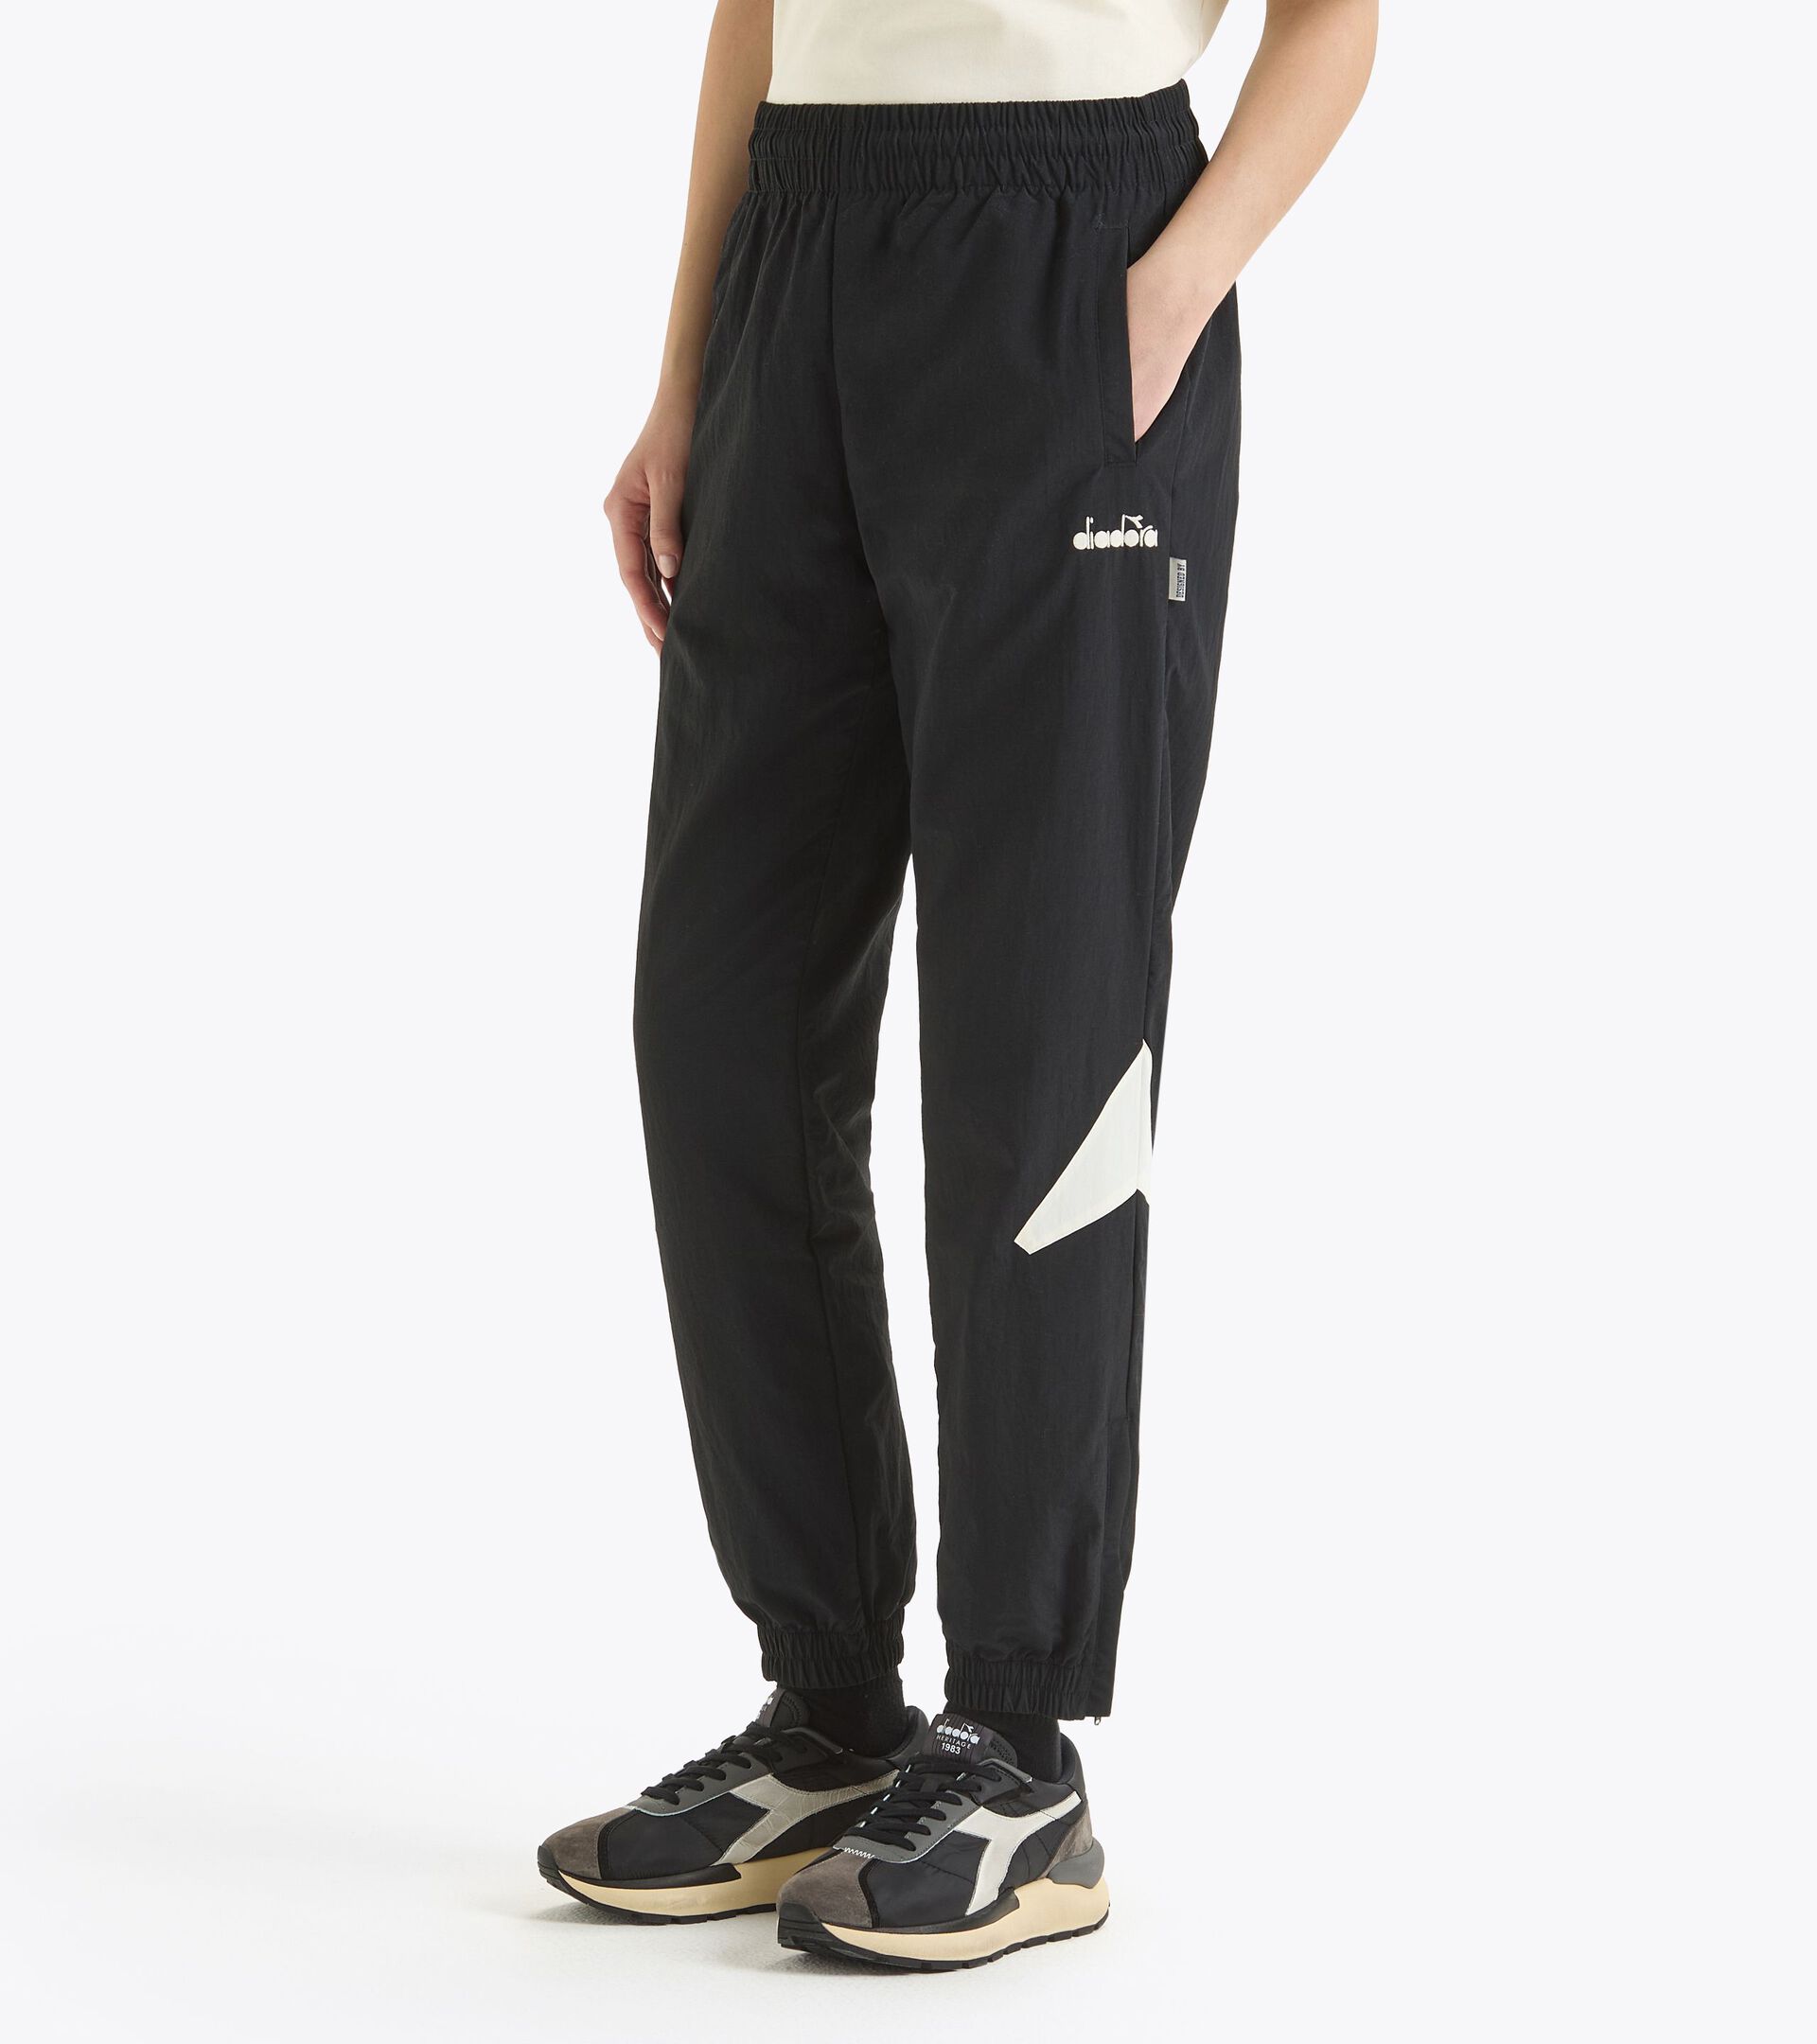 Pantalones deportivos - Made in Italy - Gender neutral TRACK PANTS LEGACY NEGRO - Diadora